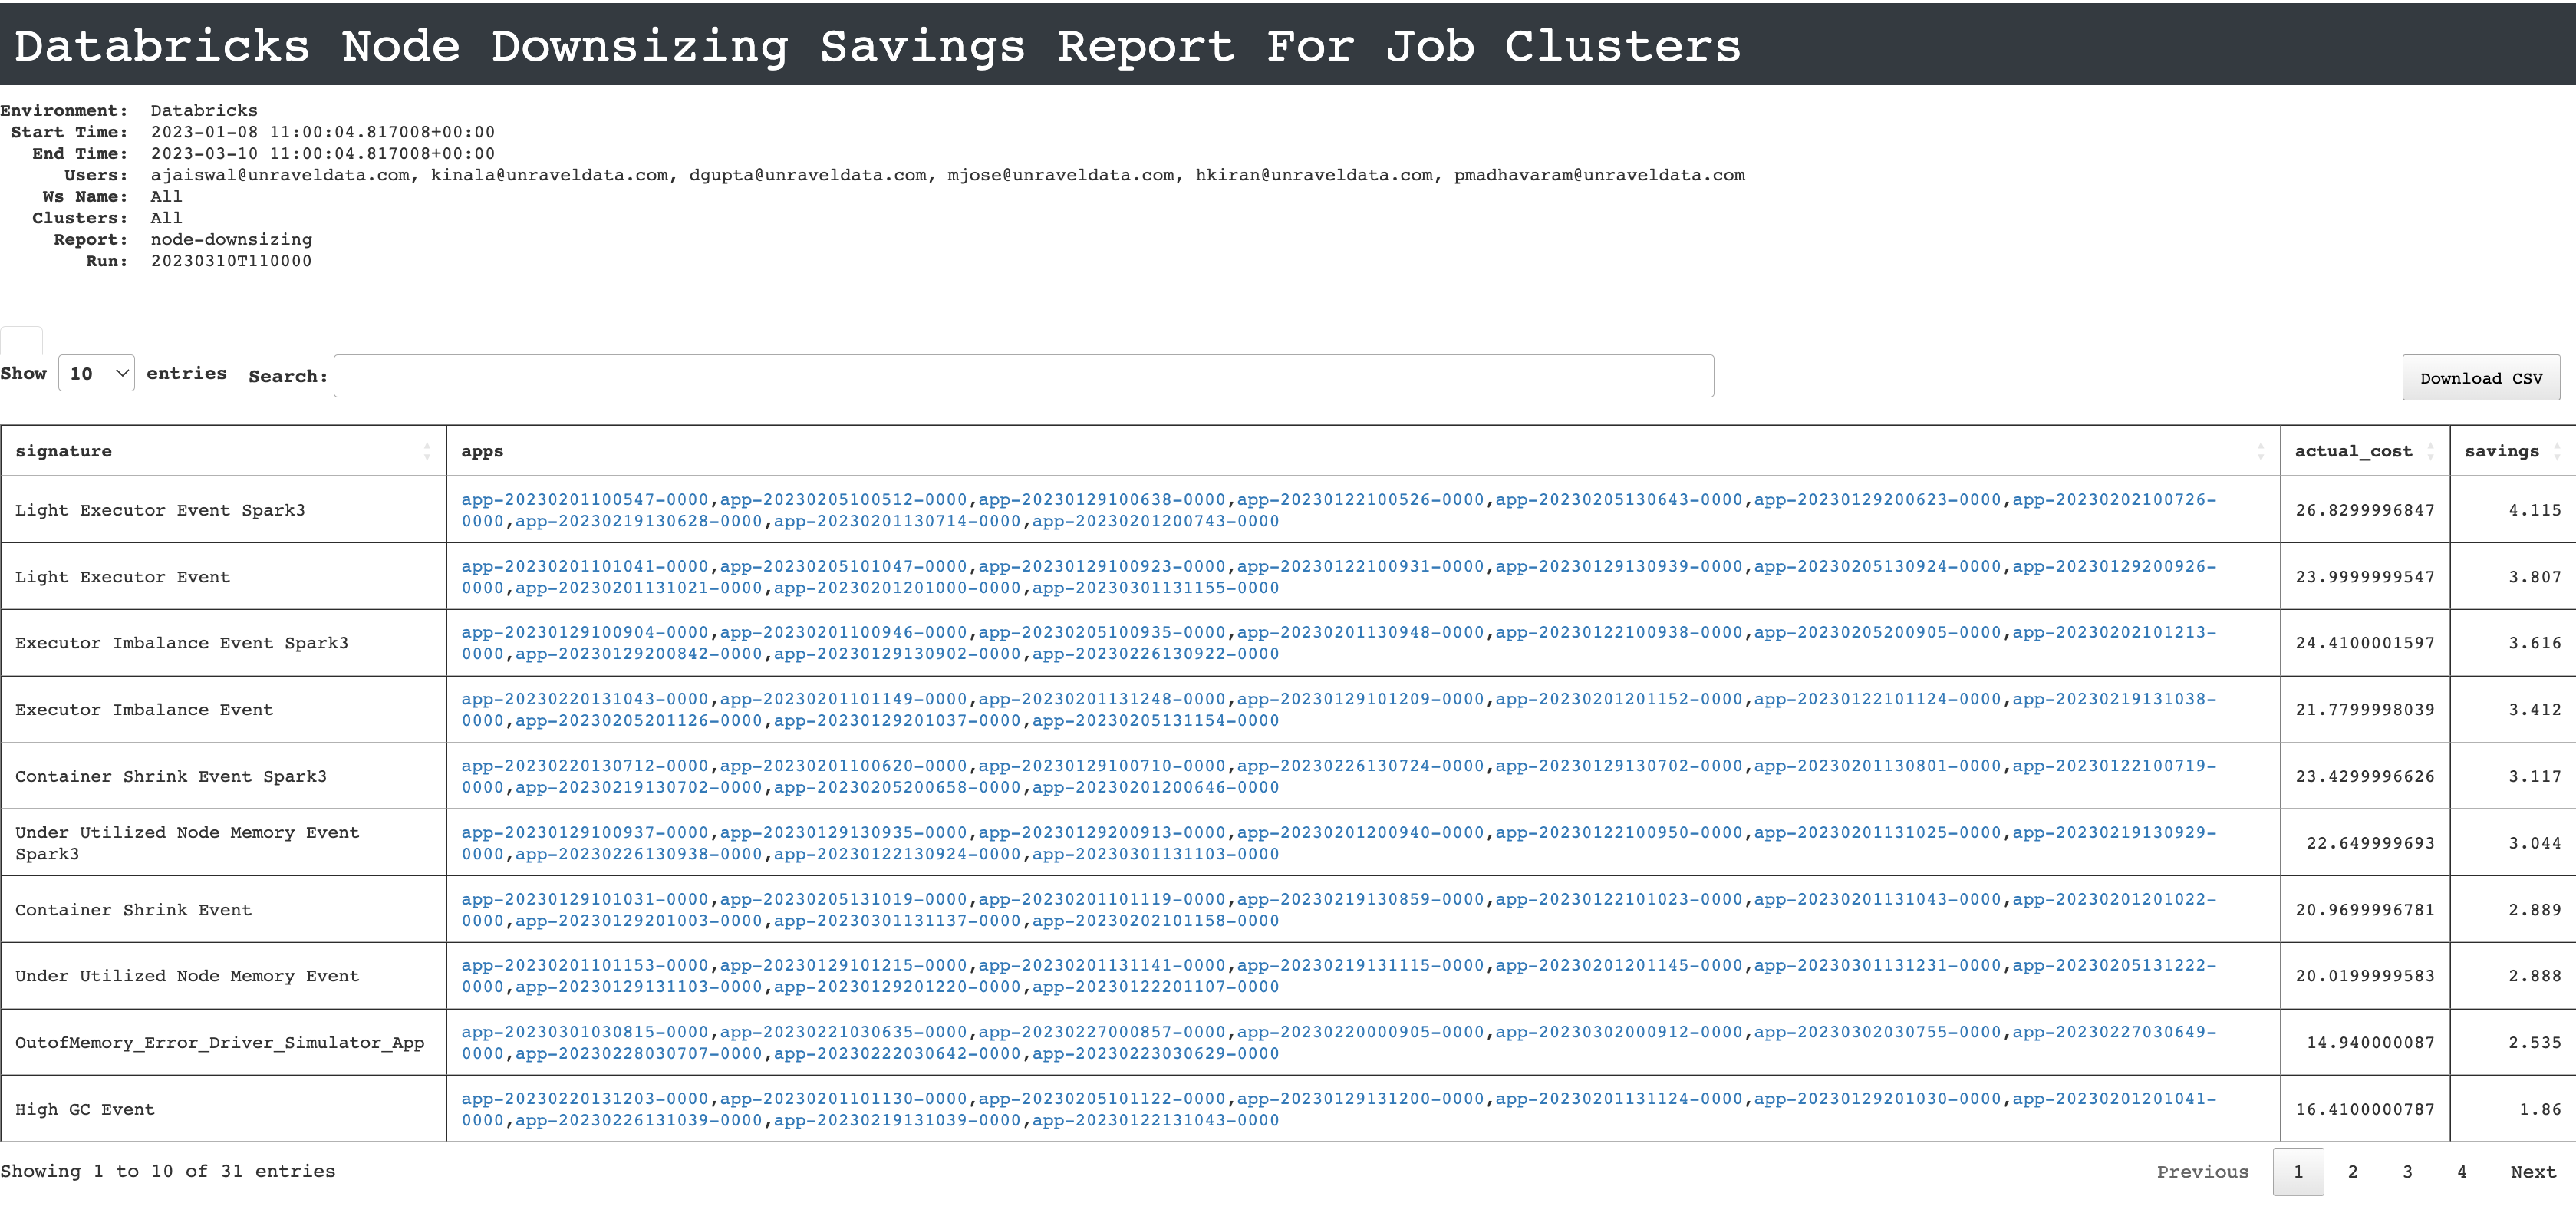 databricks-node-savings-job-clusters.png